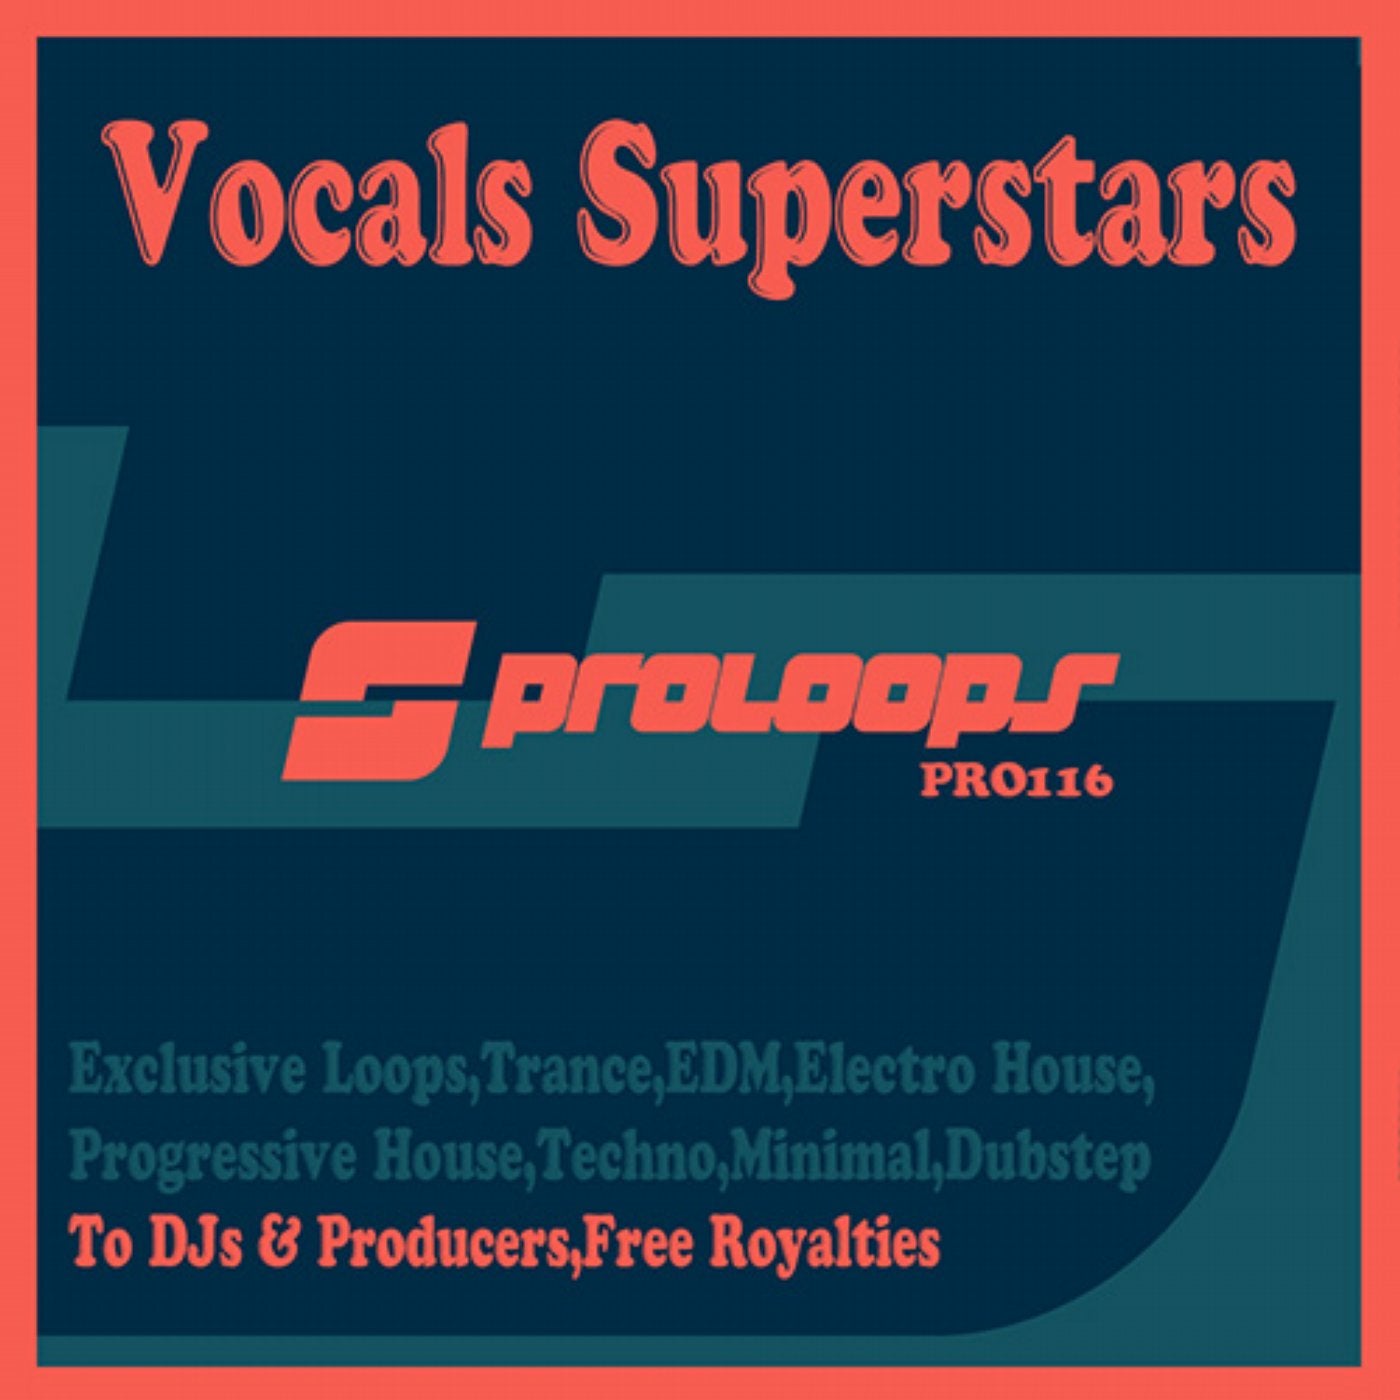 Vocals Superstars DJ Tools